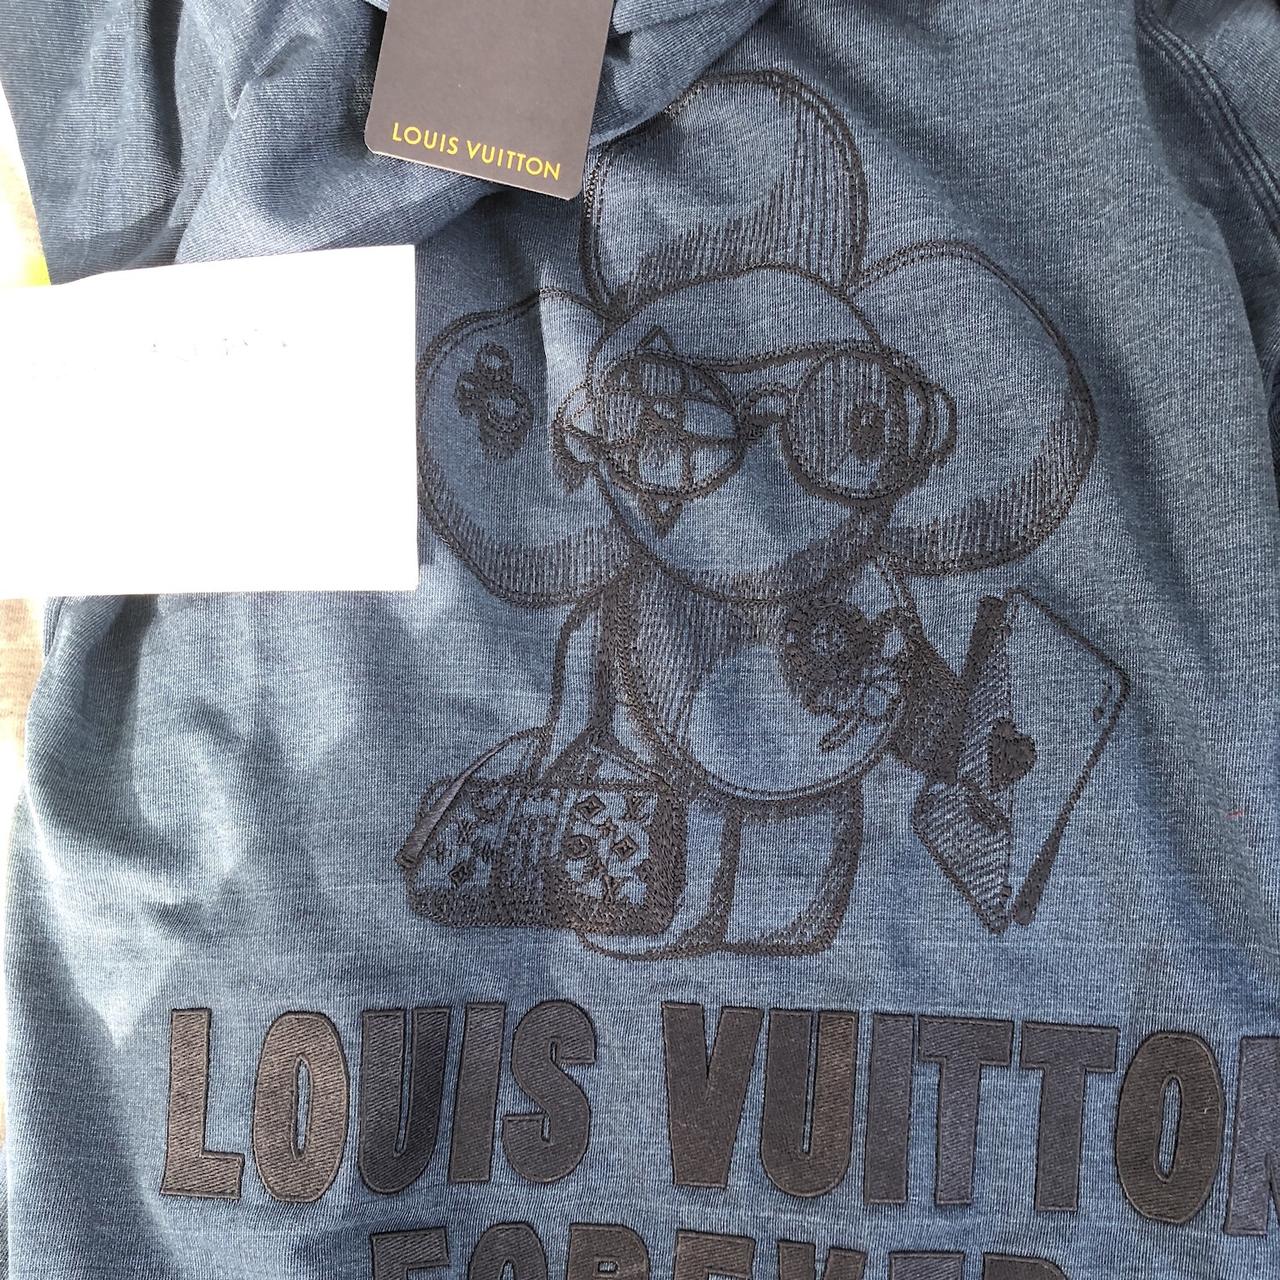 Louis Vuitton 2018 Vivienne Forever Sweatshirt, Luxury, Apparel on